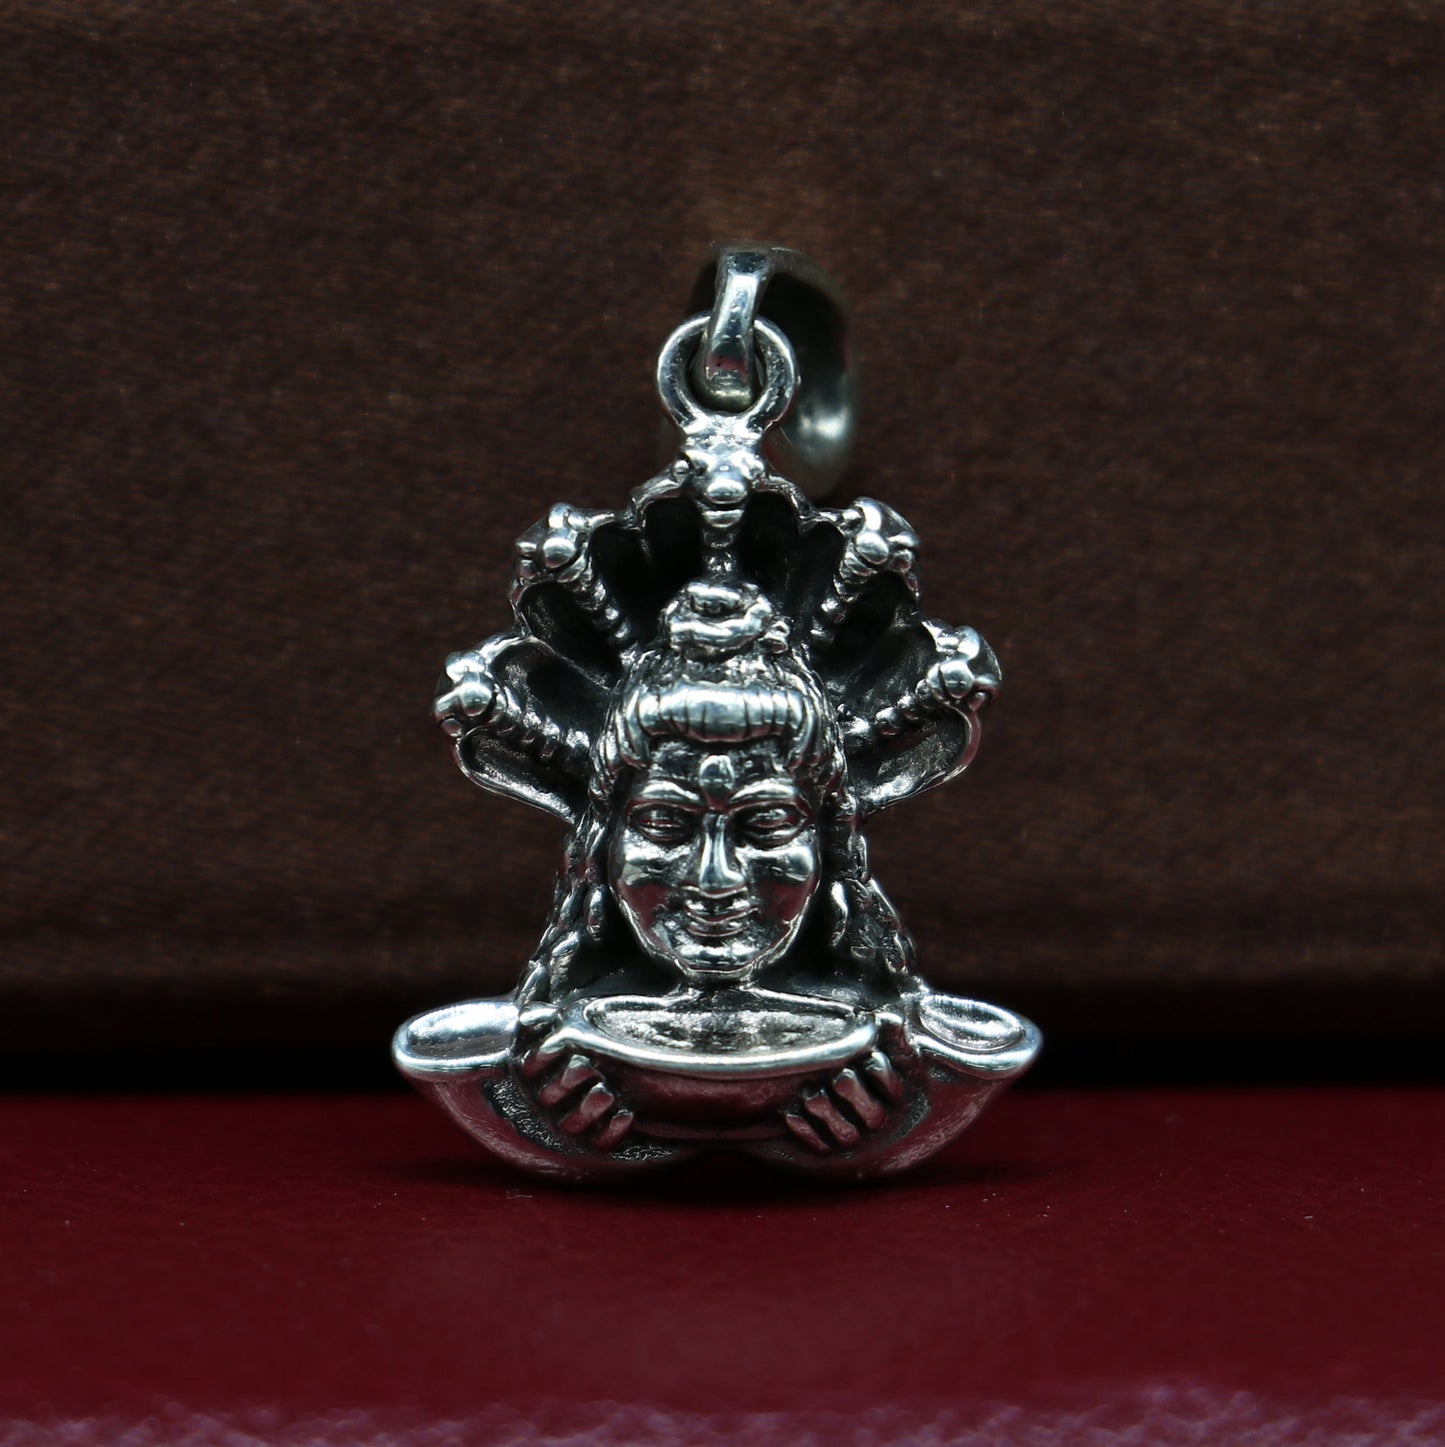 925 sterling silver handmade Hindu idol God Shiva pendant, amazing designer fabulous pendant unisex gifting jewelry ssp548 - TRIBAL ORNAMENTS